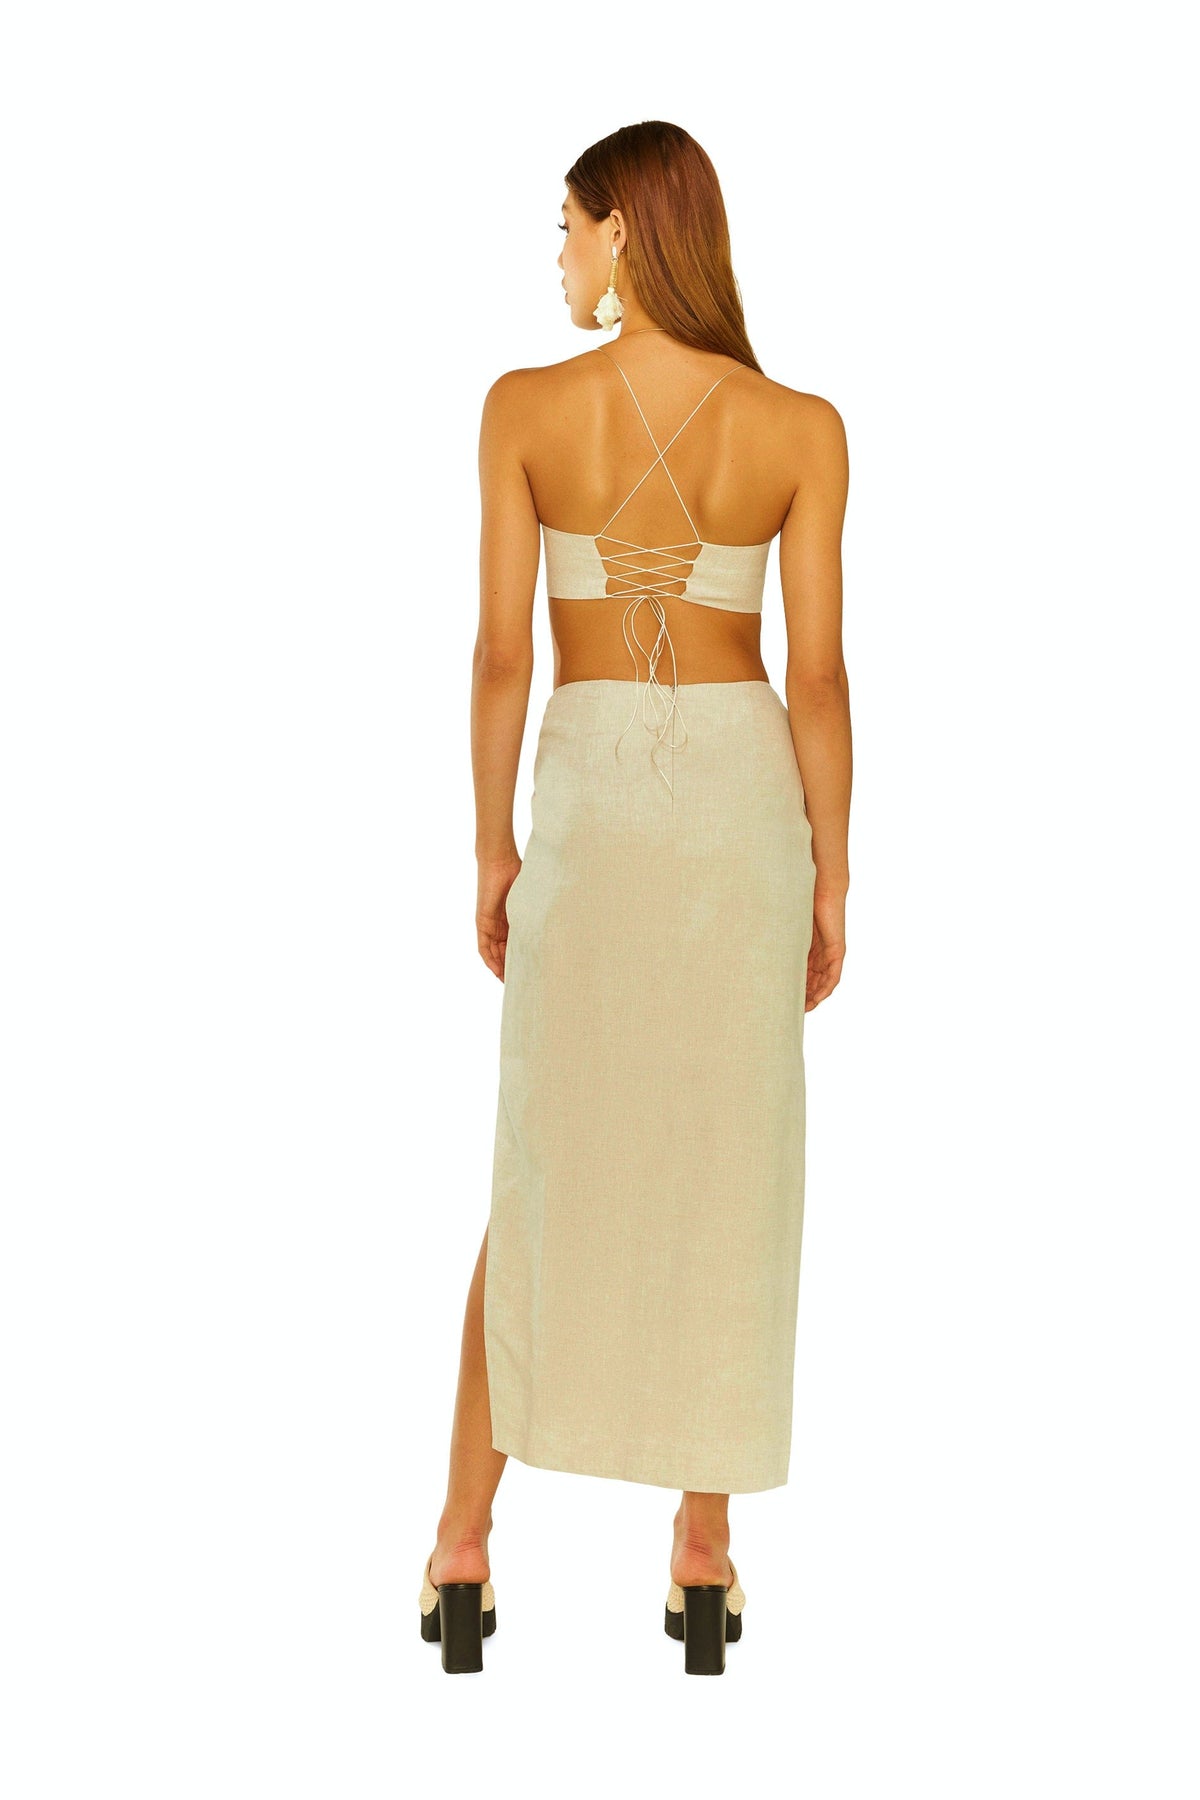 Lisa Maree Ready to Wear COSMIC ENERGY SKIRT COSMIC ENERGY - Linen Split skirt | Lisa Maree Online Store